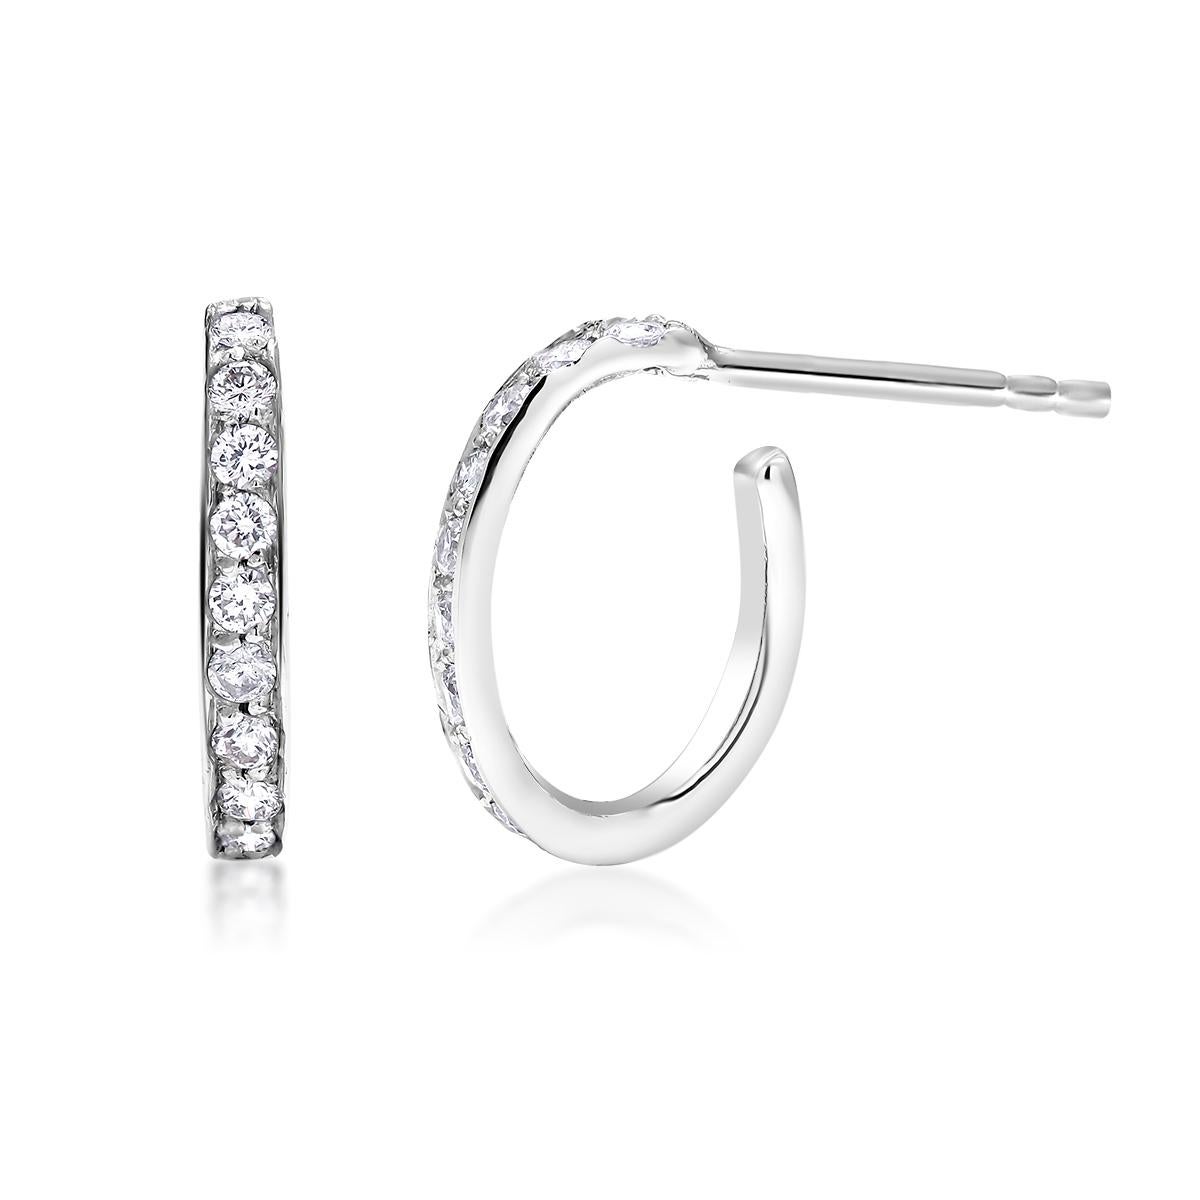 Fourteen Karat diamond mini hoop earrings
Earrings measuring 0.35